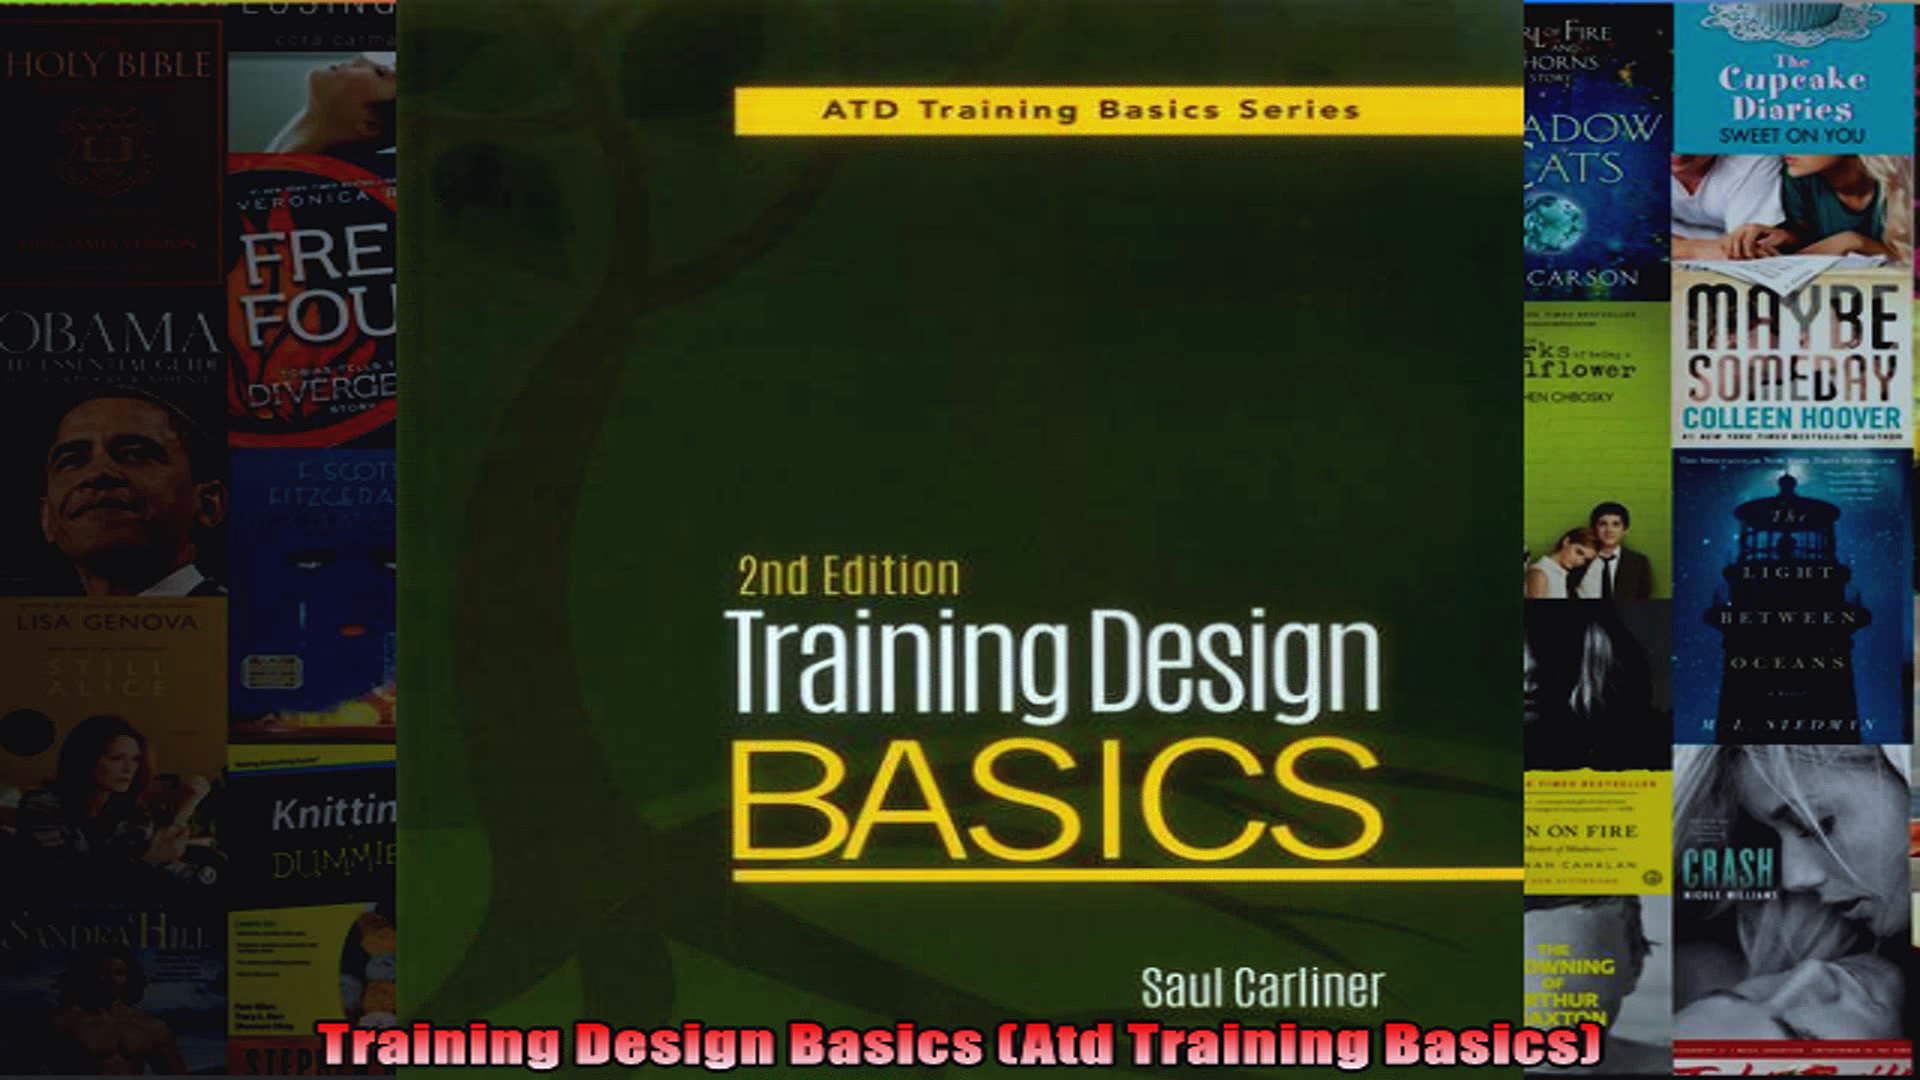 Training Design Basics Atd Training Basics